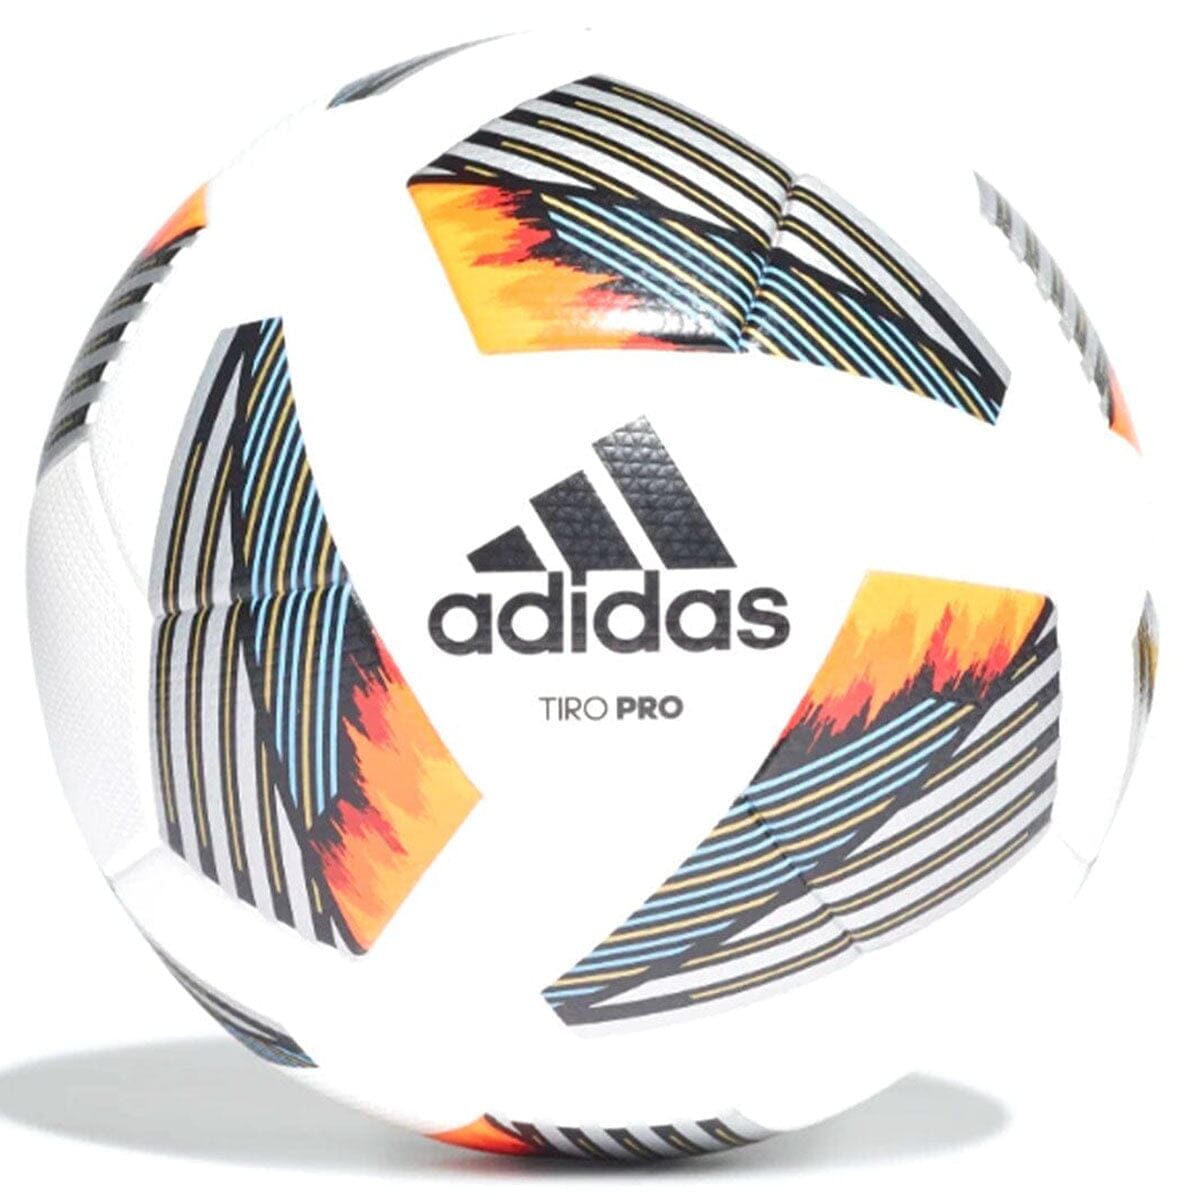 adidas Tiro Pro Ball | FS0373 - 6 Packs Soccer Ball Adidas 